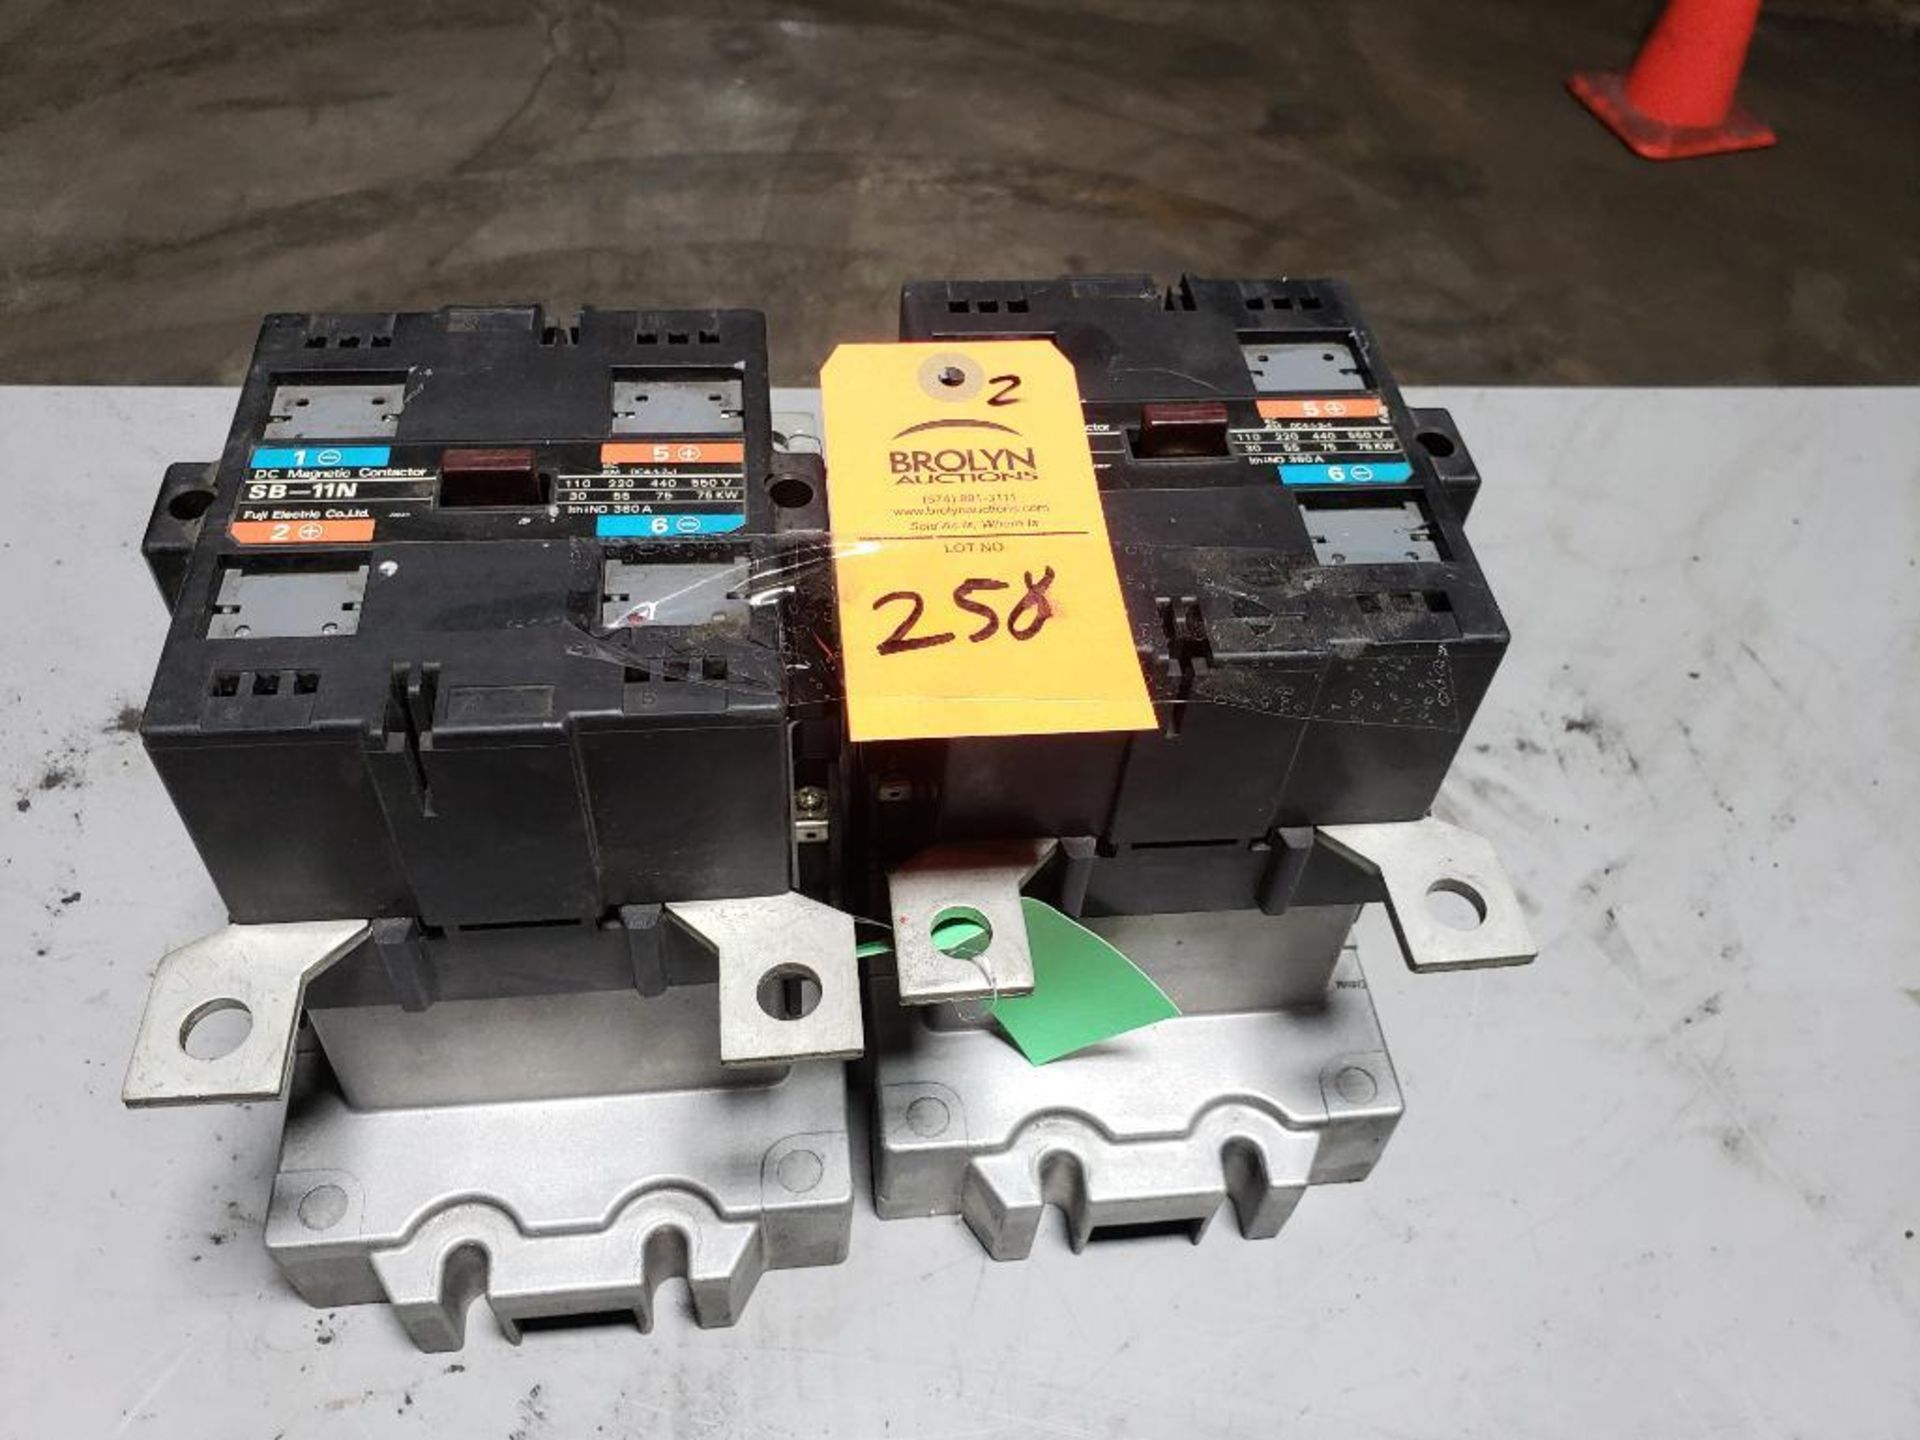 Qty 2 - Fuji contactor. Part number SB-11N. - Image 4 of 4